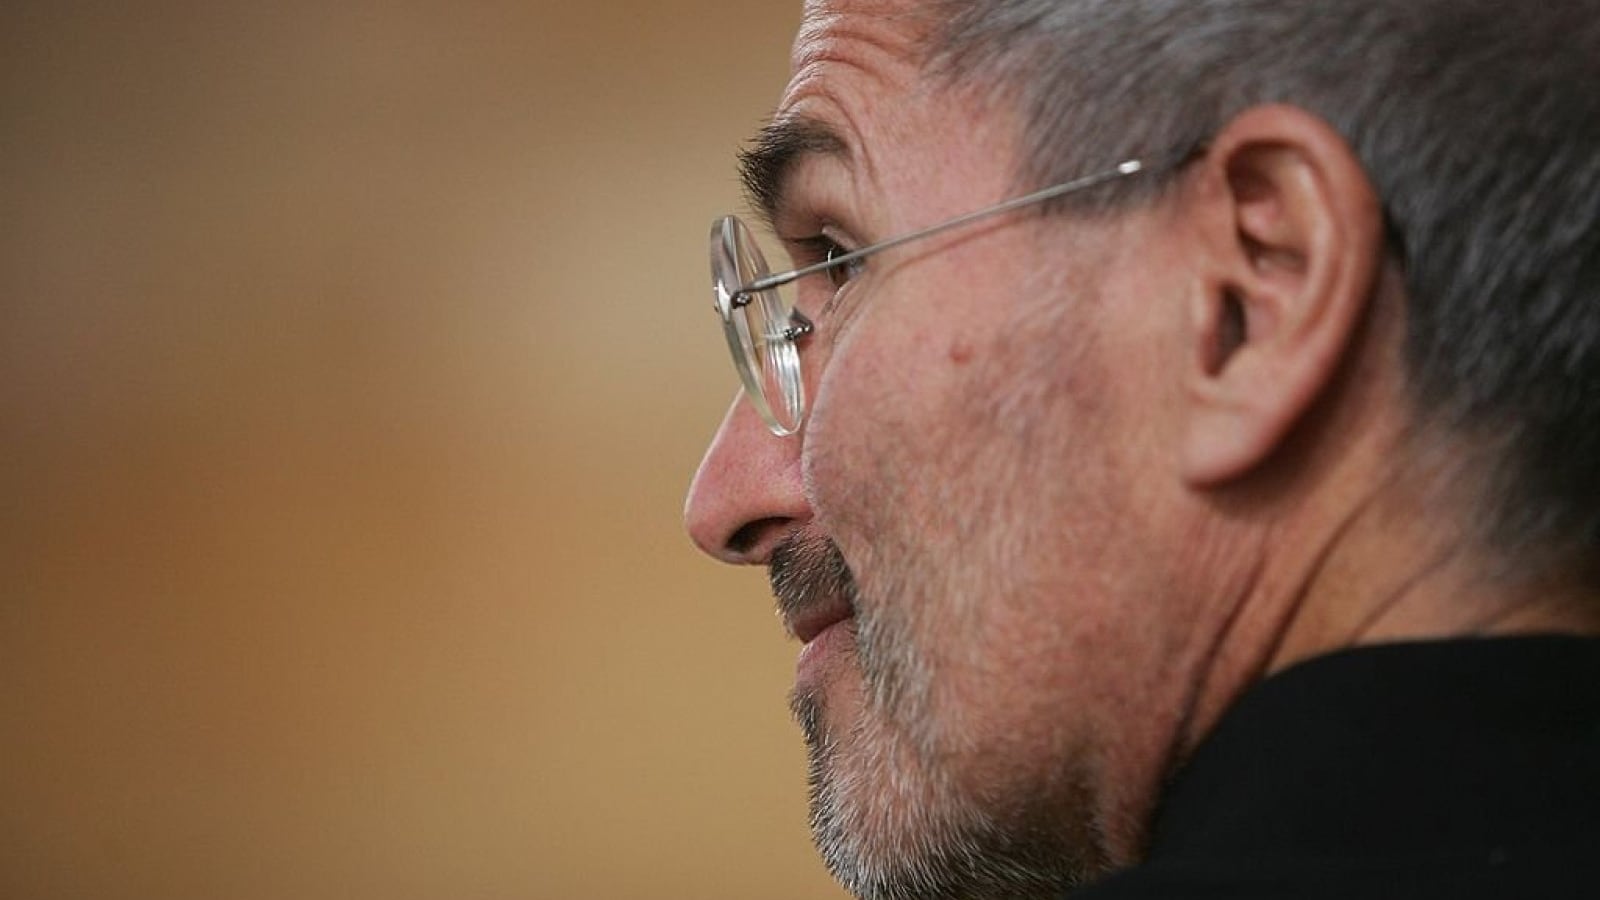 Fotografía de Steve Jobs, fundador de Apple